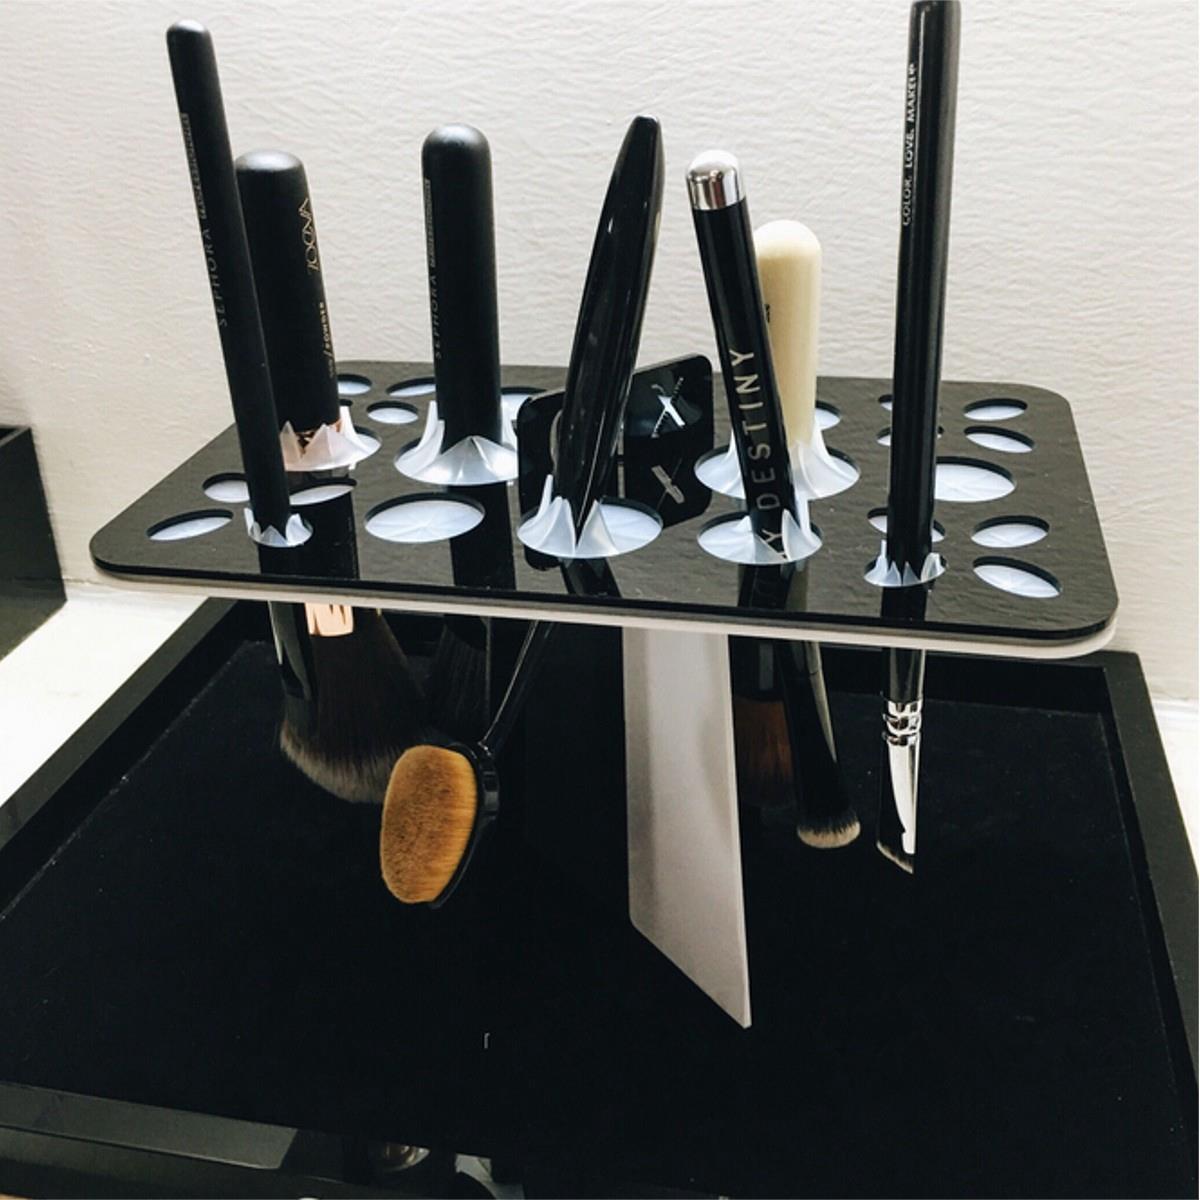 25 Holes Acrylic Makeup Brush Rack Eyeshadow Pen Brushes Dryer Organizer Holder Stand